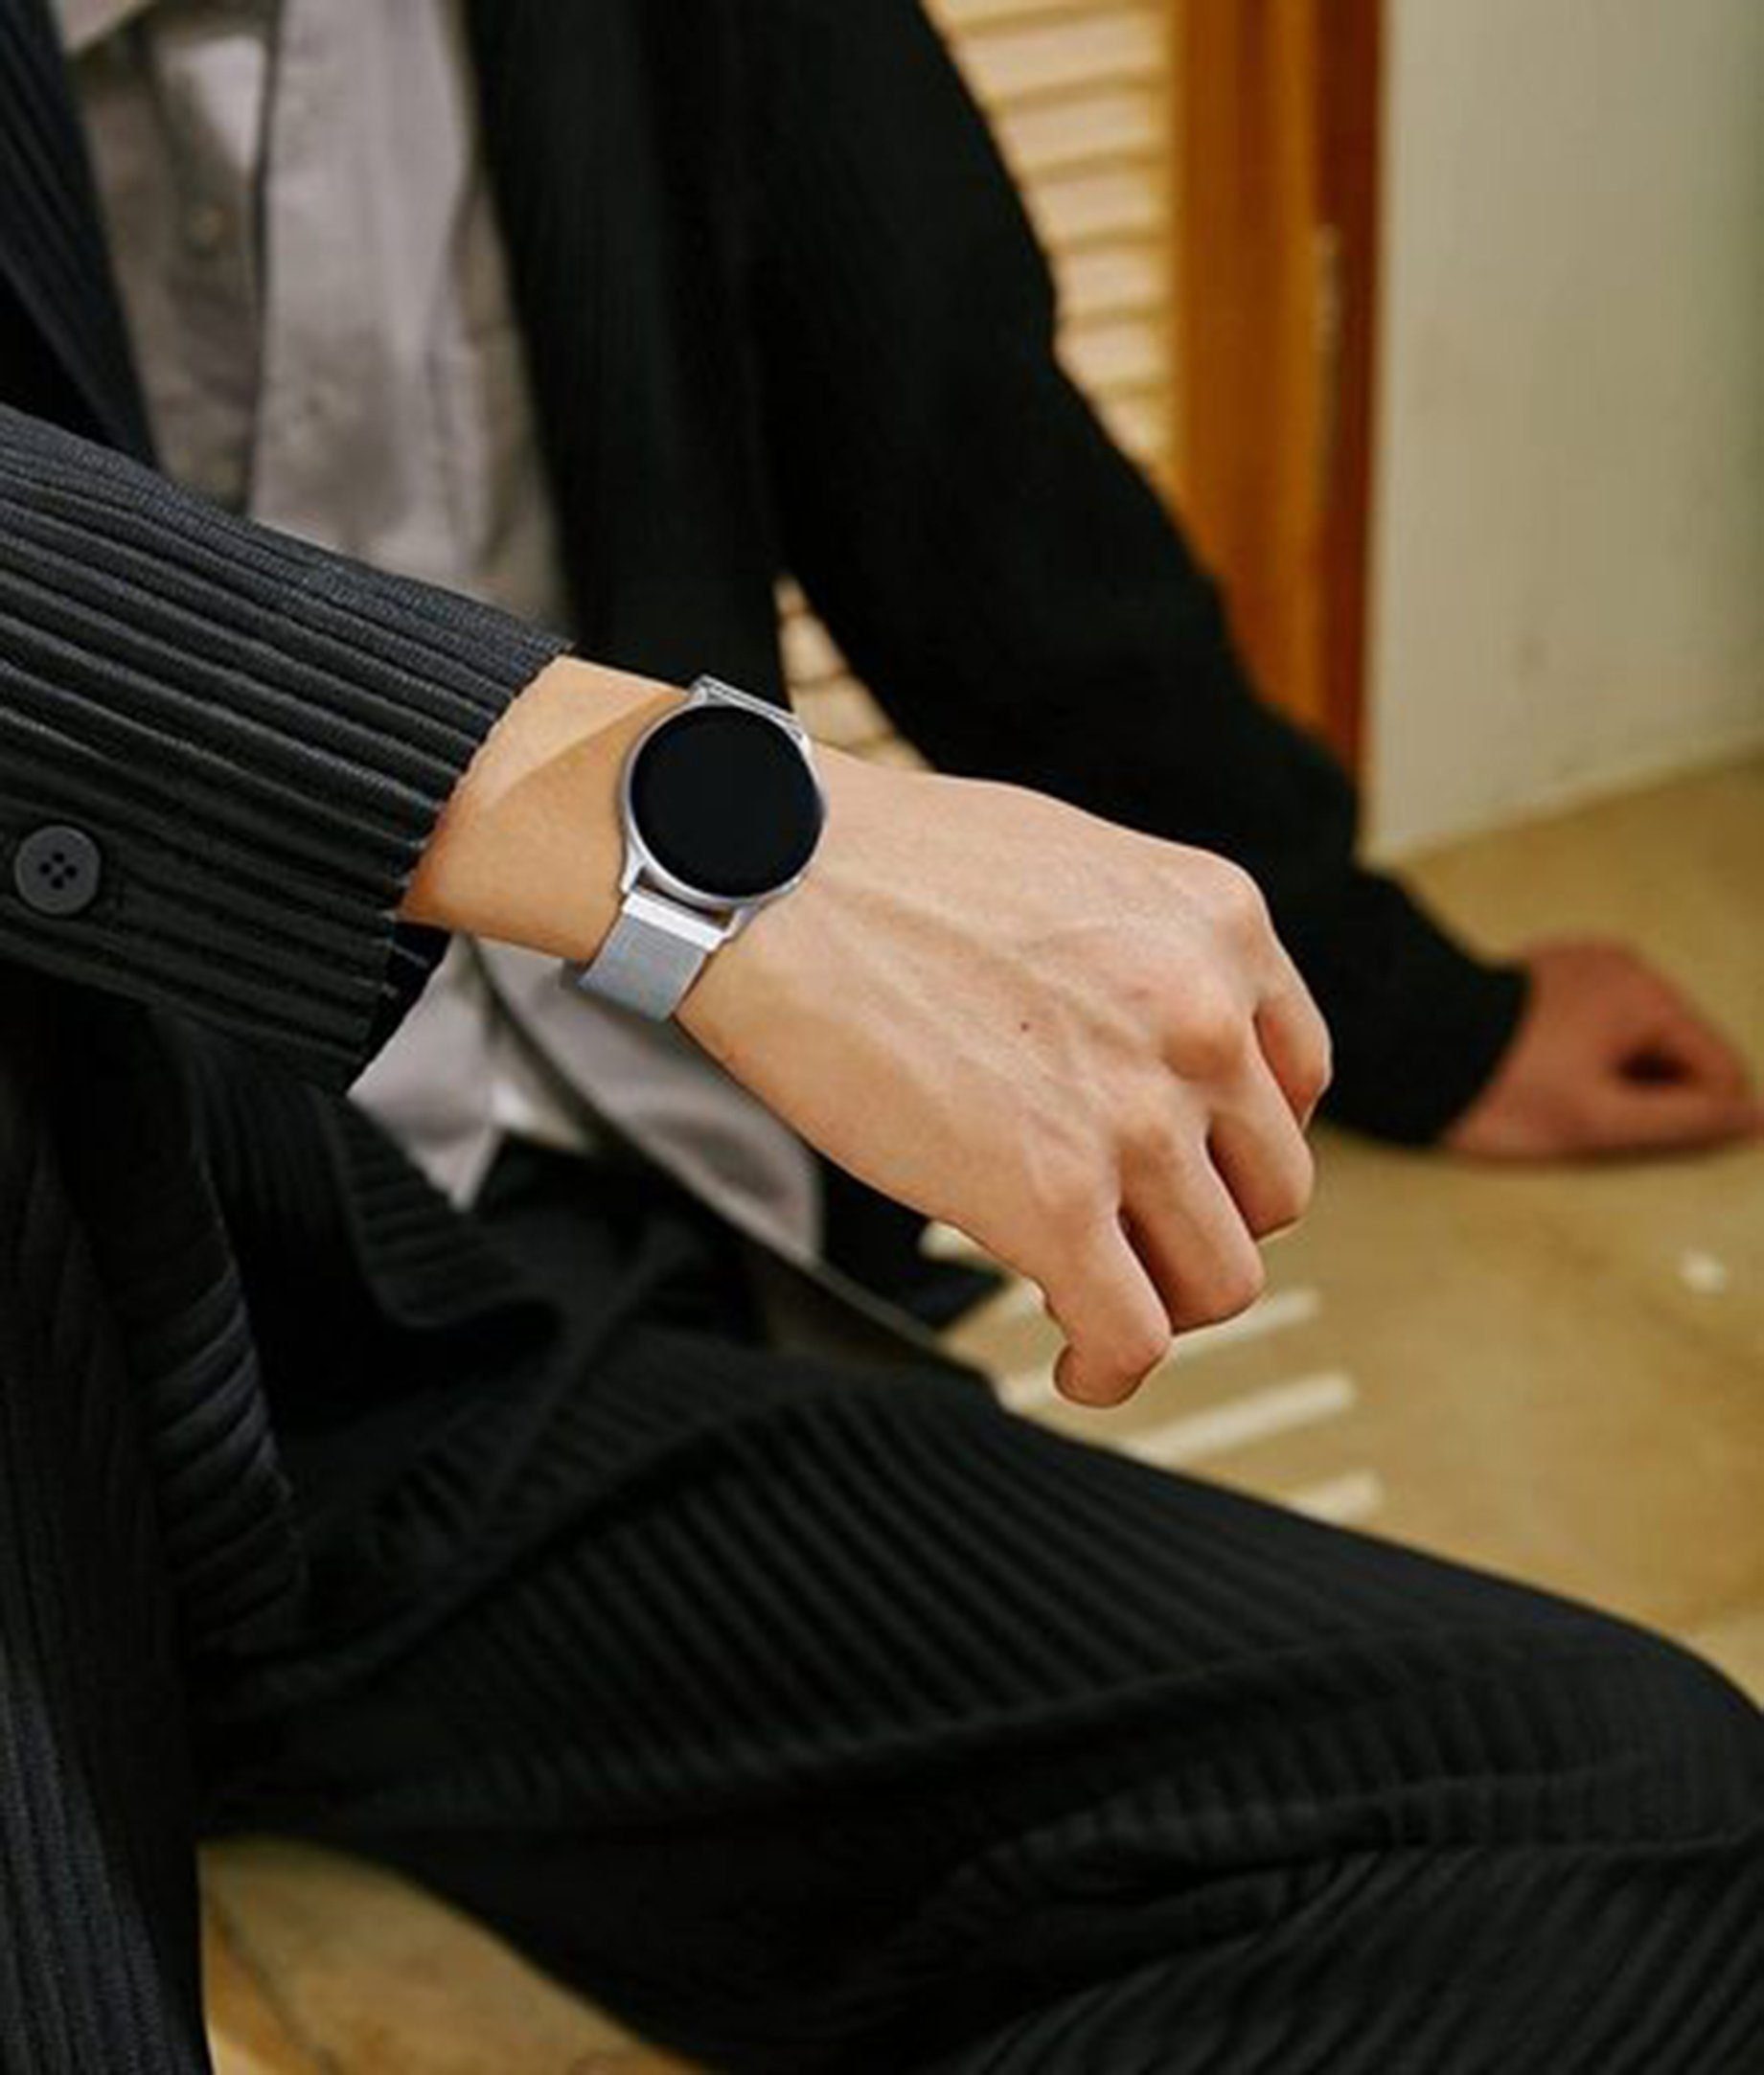 2 Smartwatch-Armband Uhrenarmbänder, Diida Smartwatch-Armband, /Silber/Roségold Fitbit / SE /Lite/ Versa für Versa